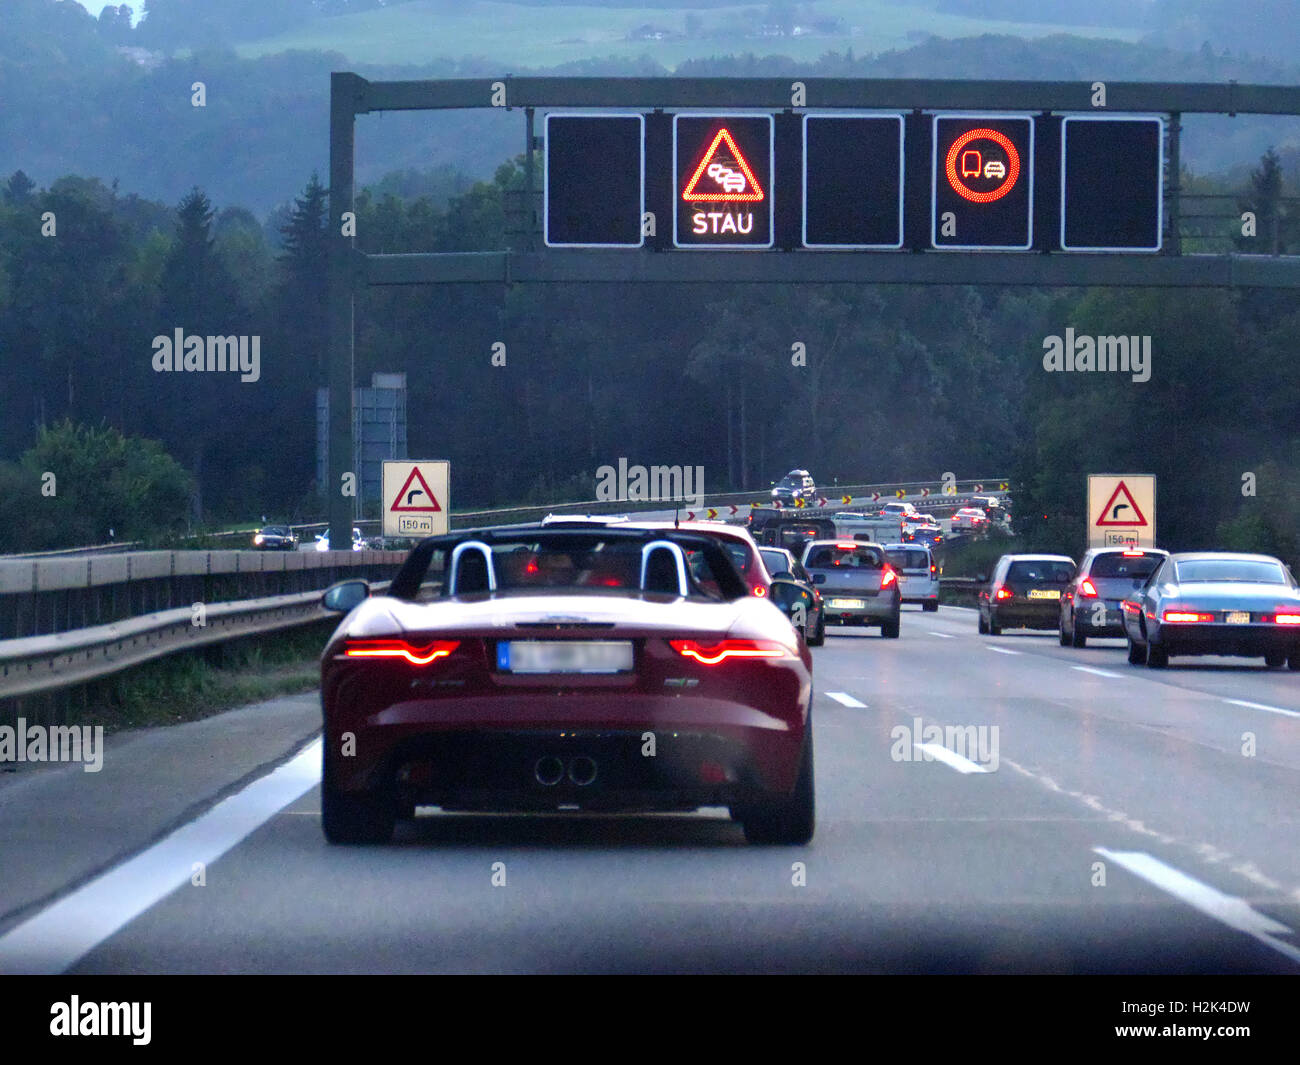 Europa Alemania Deutsche alemán Autobahn Rush Hour Embotellamiento firmar Foto de stock